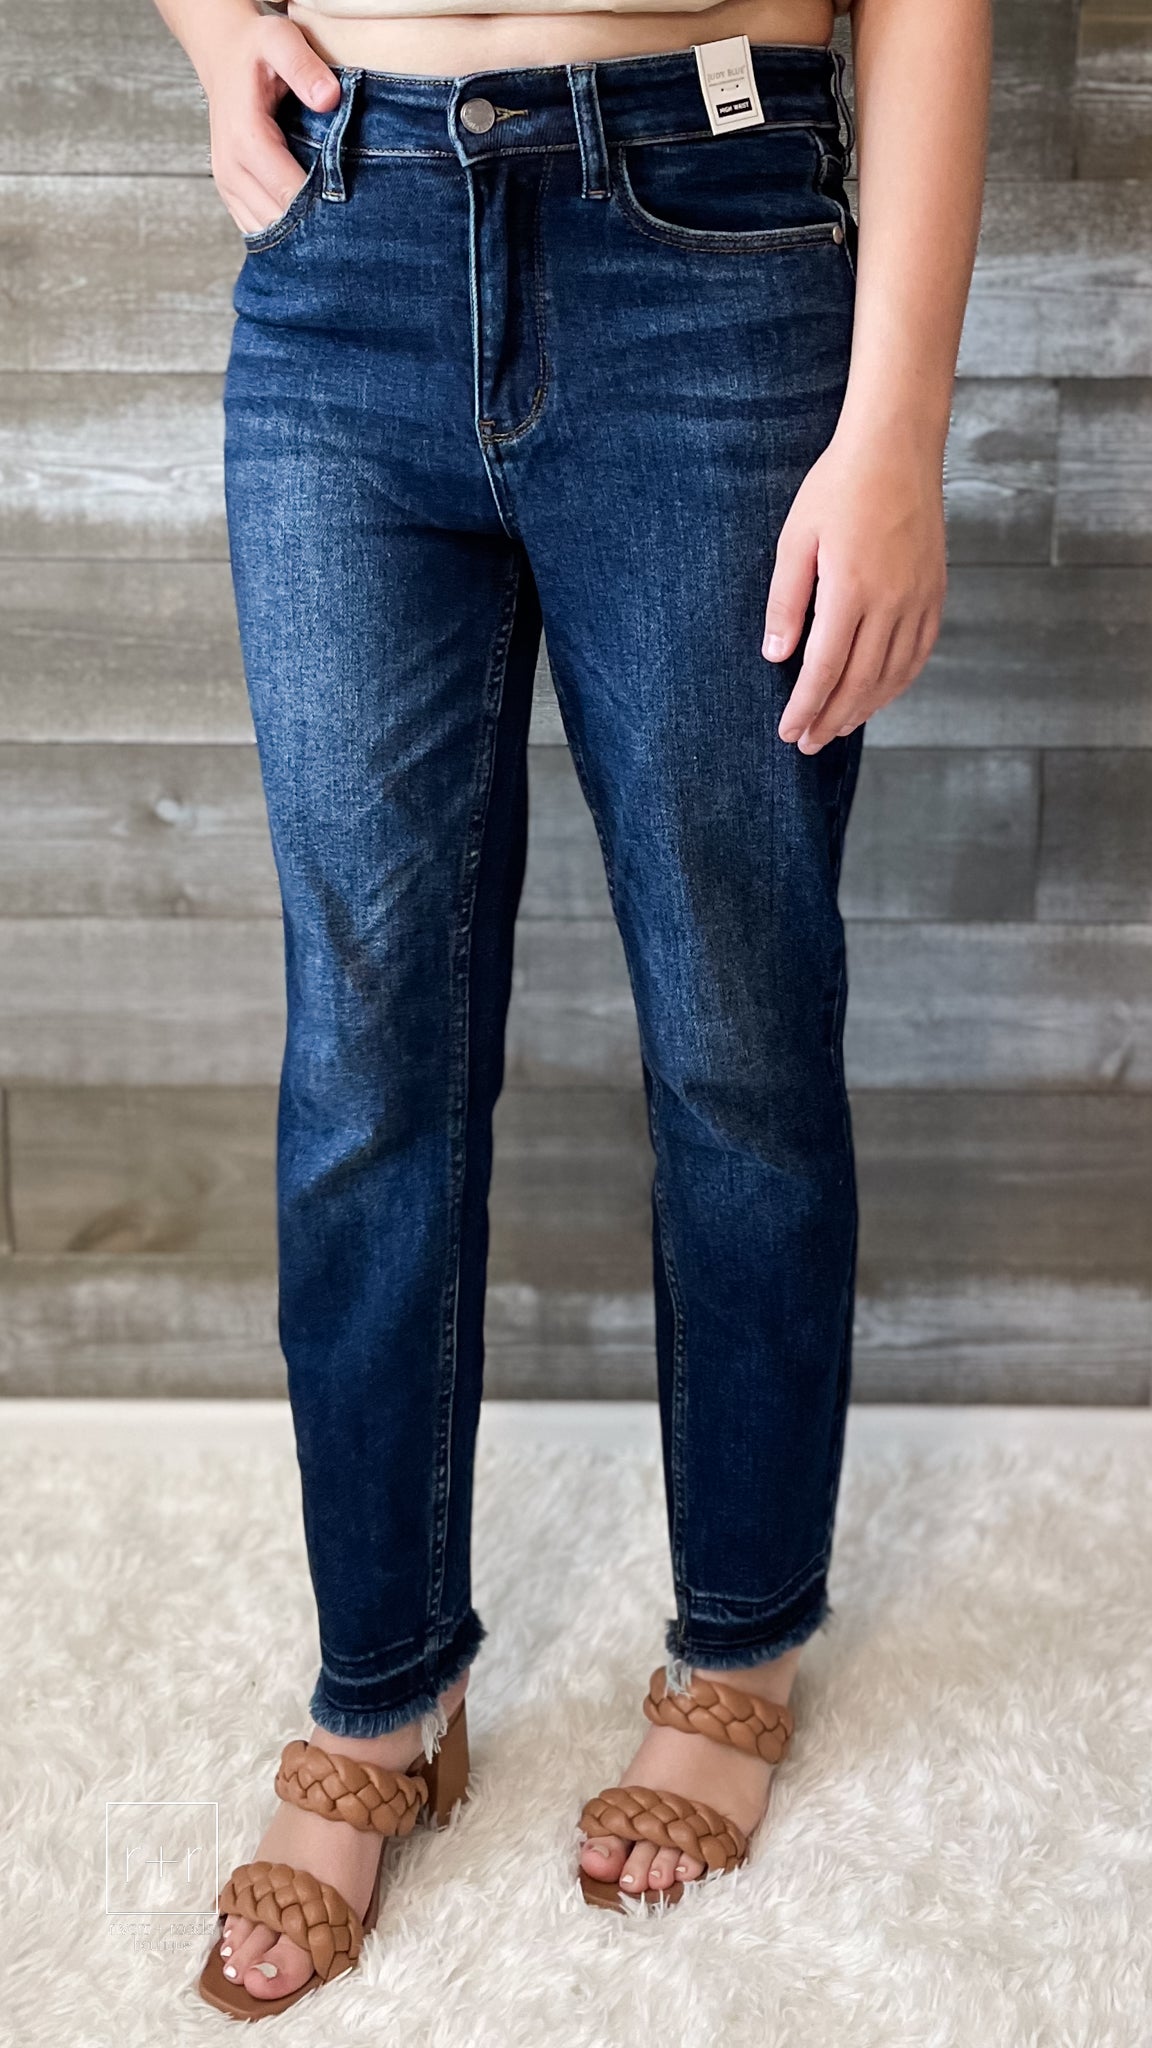 judy blue high waist slim fit dark wash jeans released hem JB88704